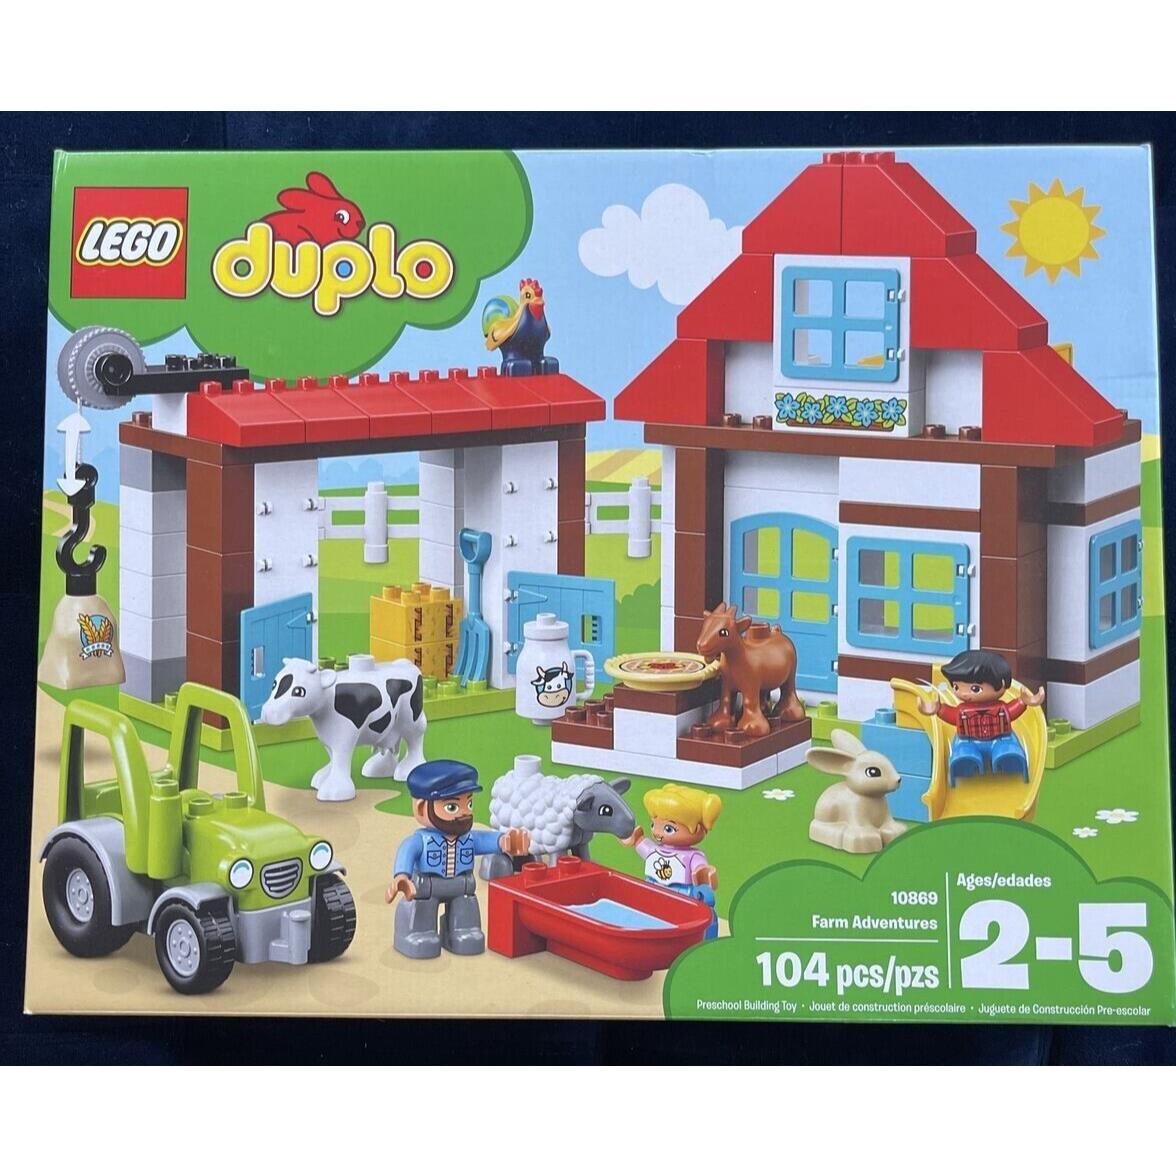 Lego Duplo Farm Adventures 2018 10869 Building Kit 104 Pcs Retired Set Toy